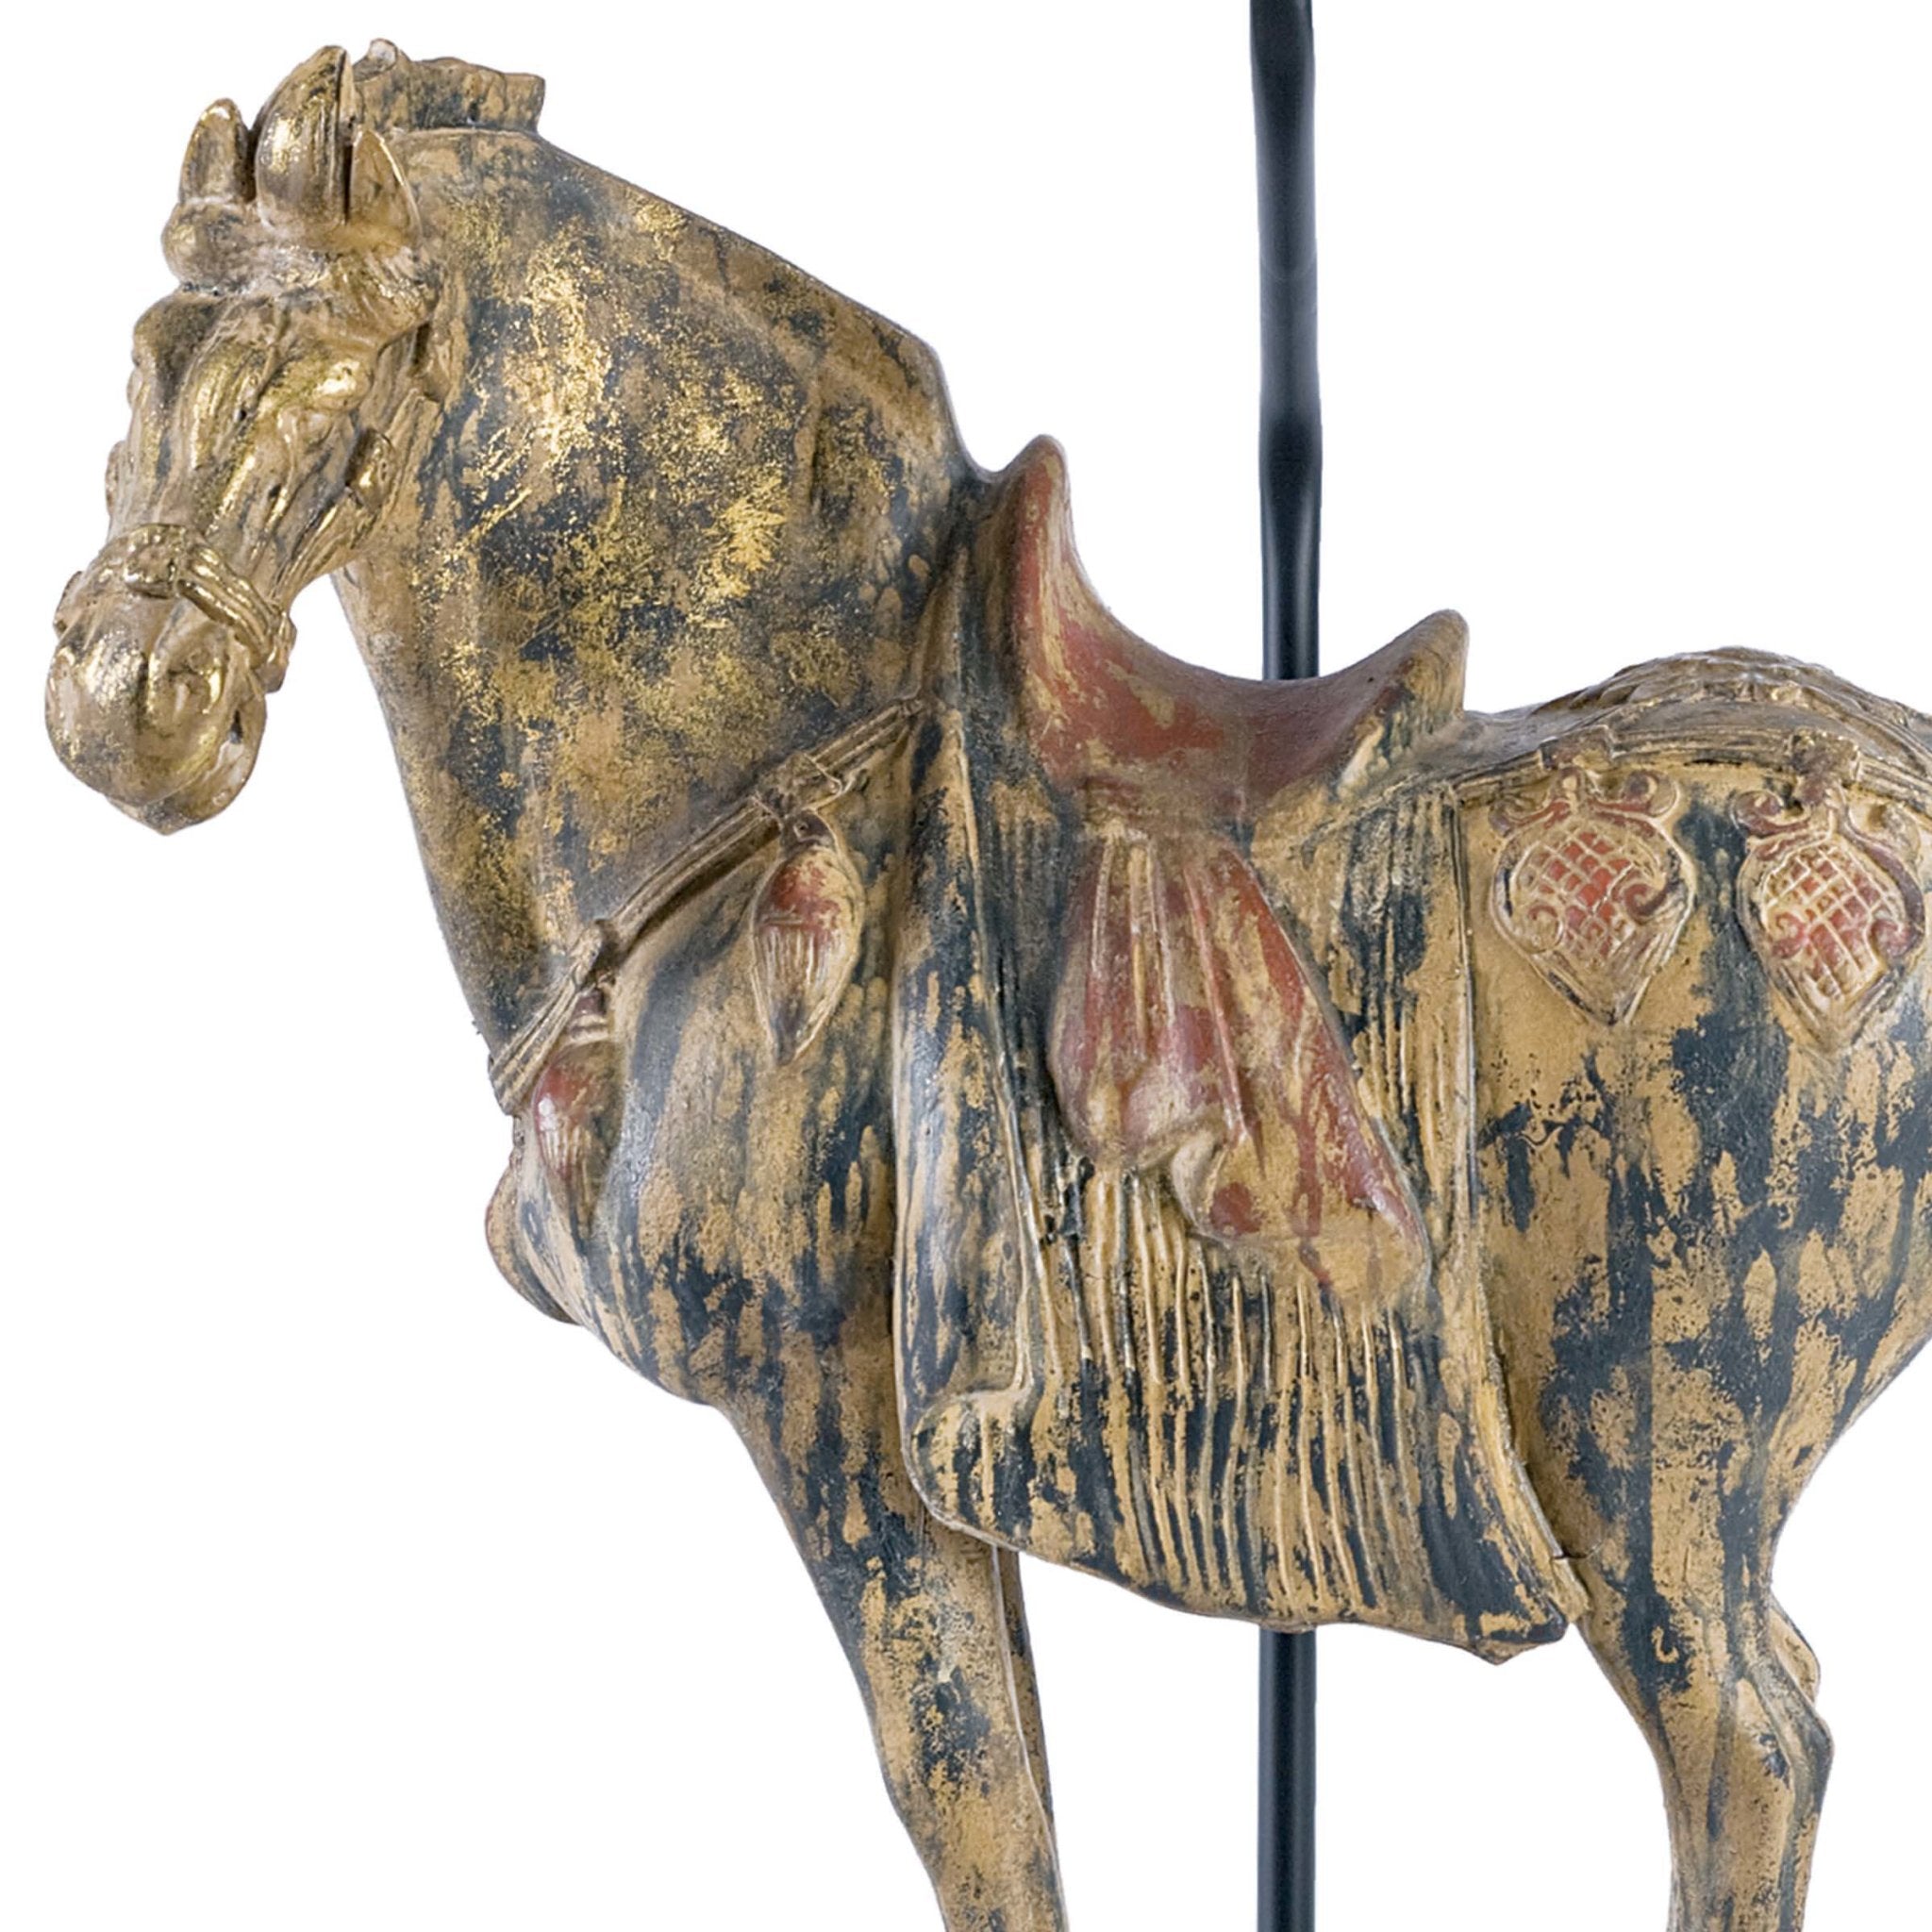 Dynasty Horse Table Lamps Pair - Decor - Tipplergoods